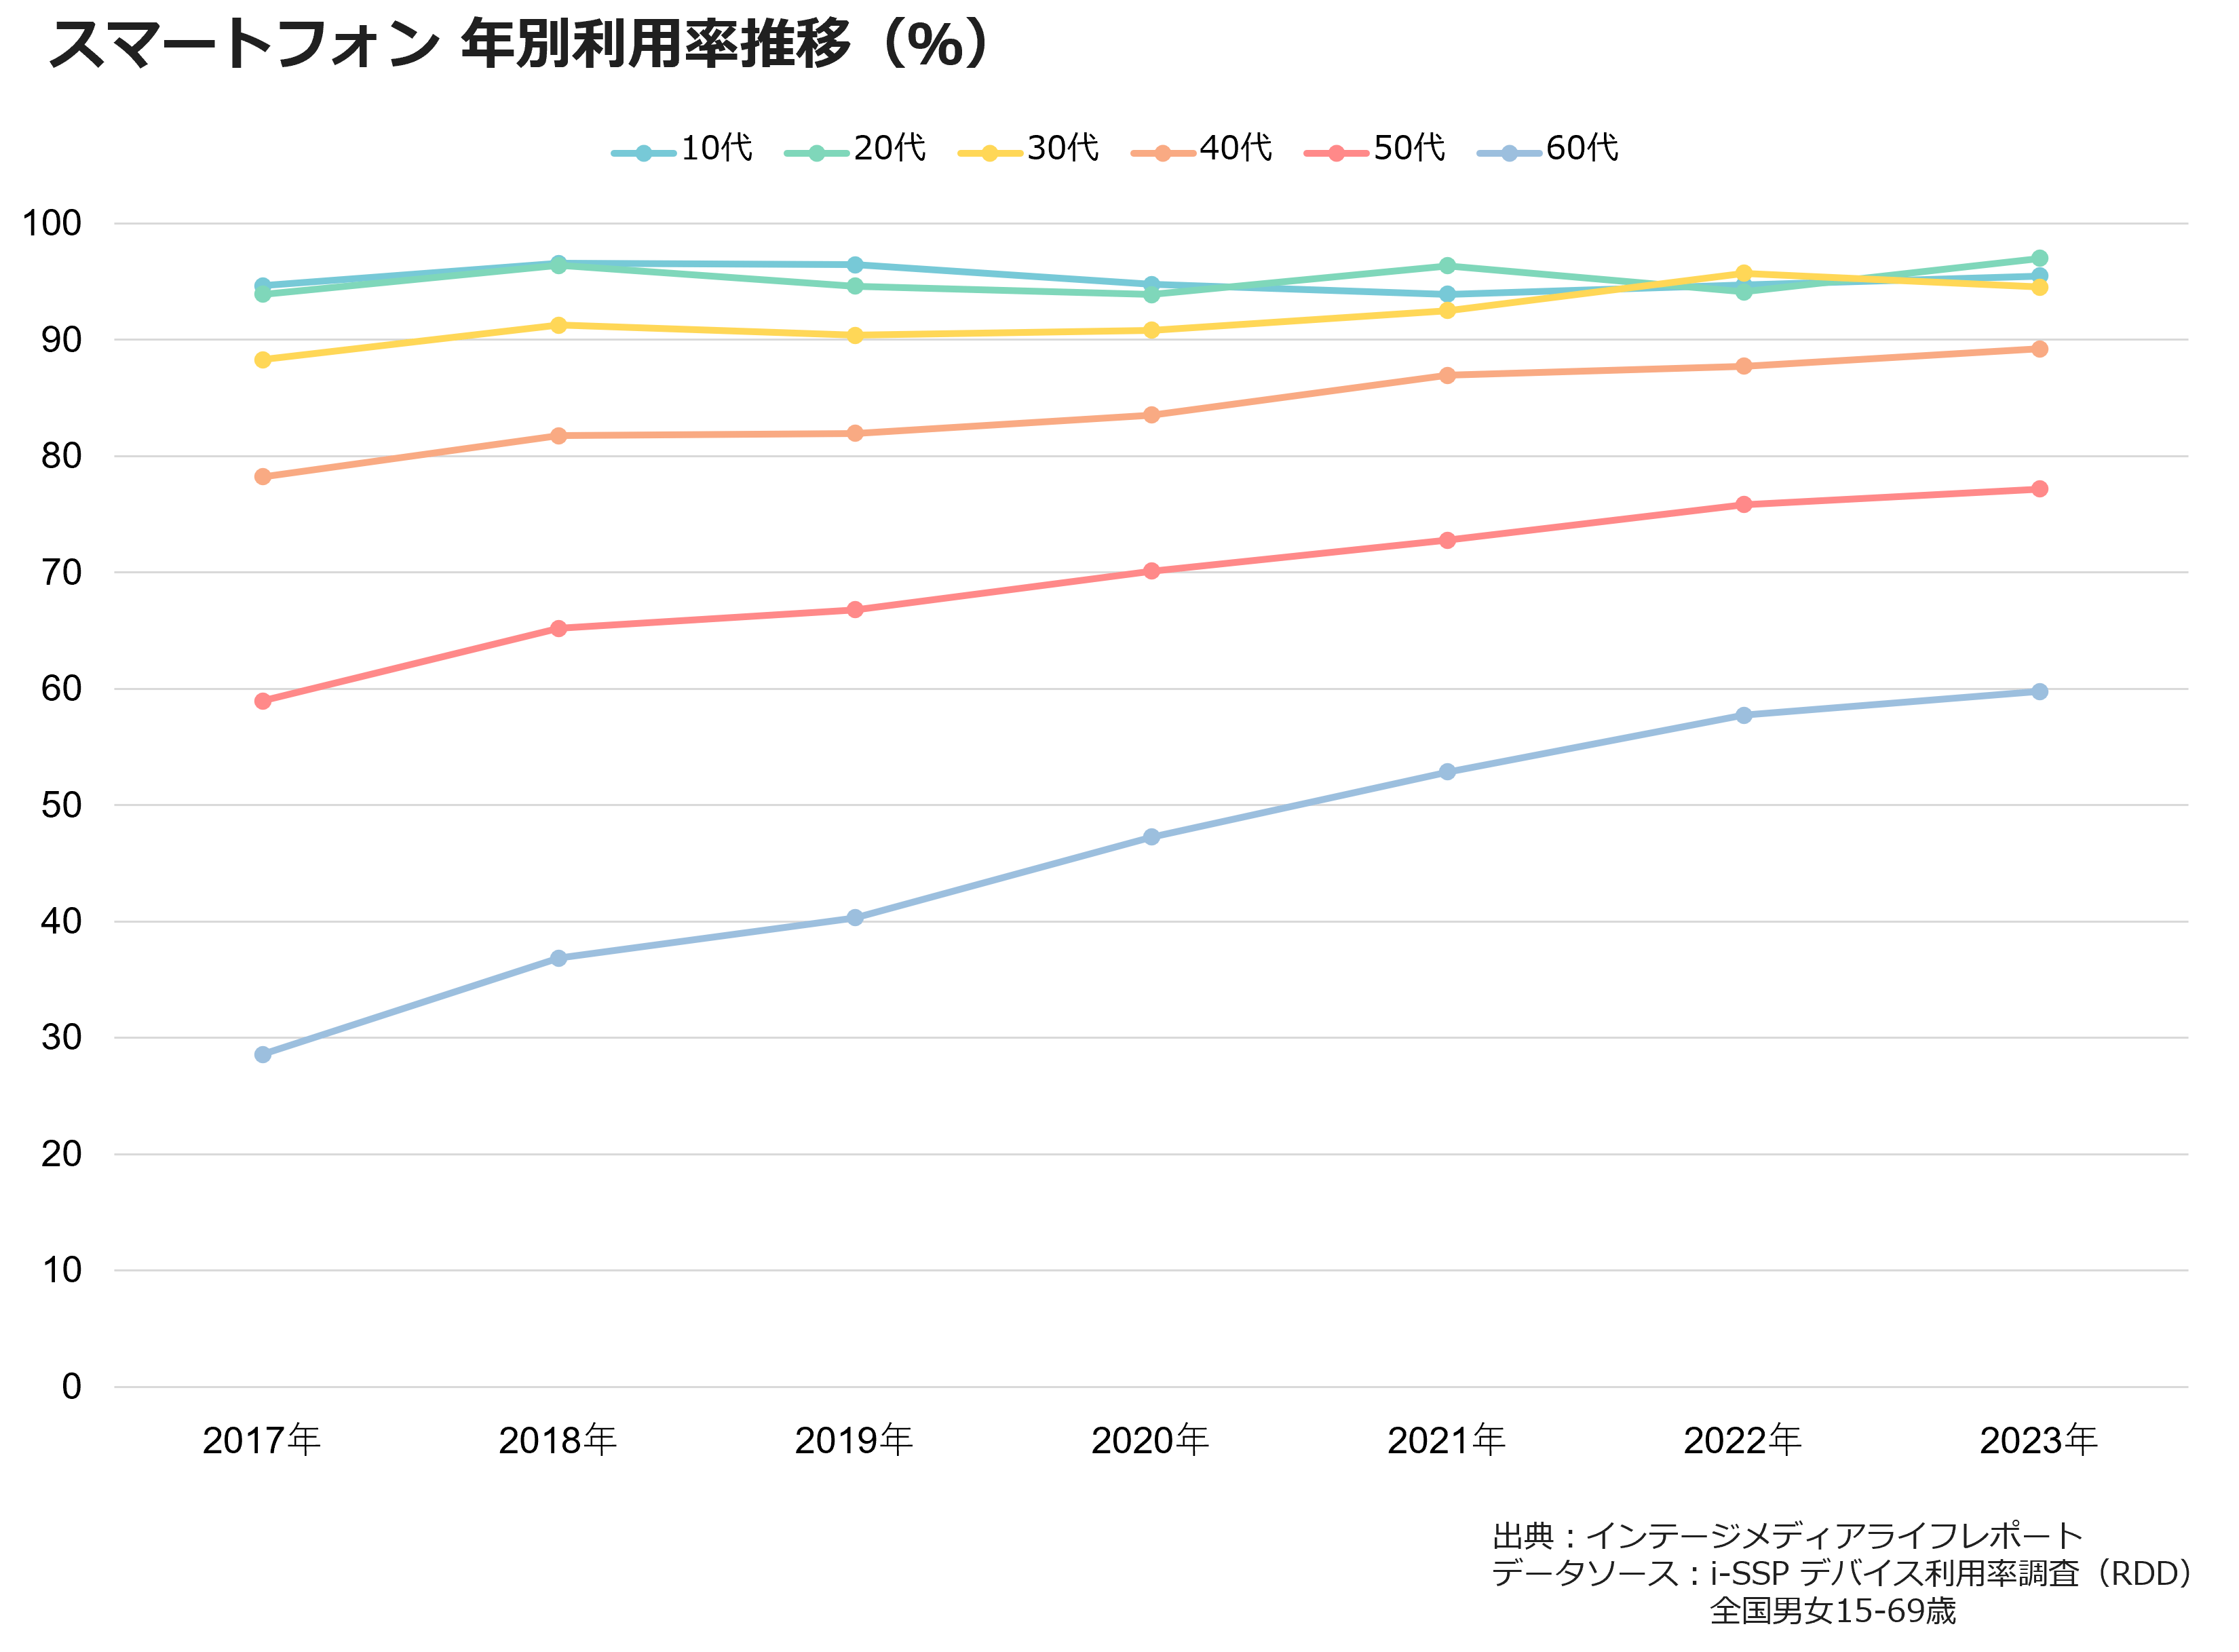 スマートフォン　年別利用率推移（％）